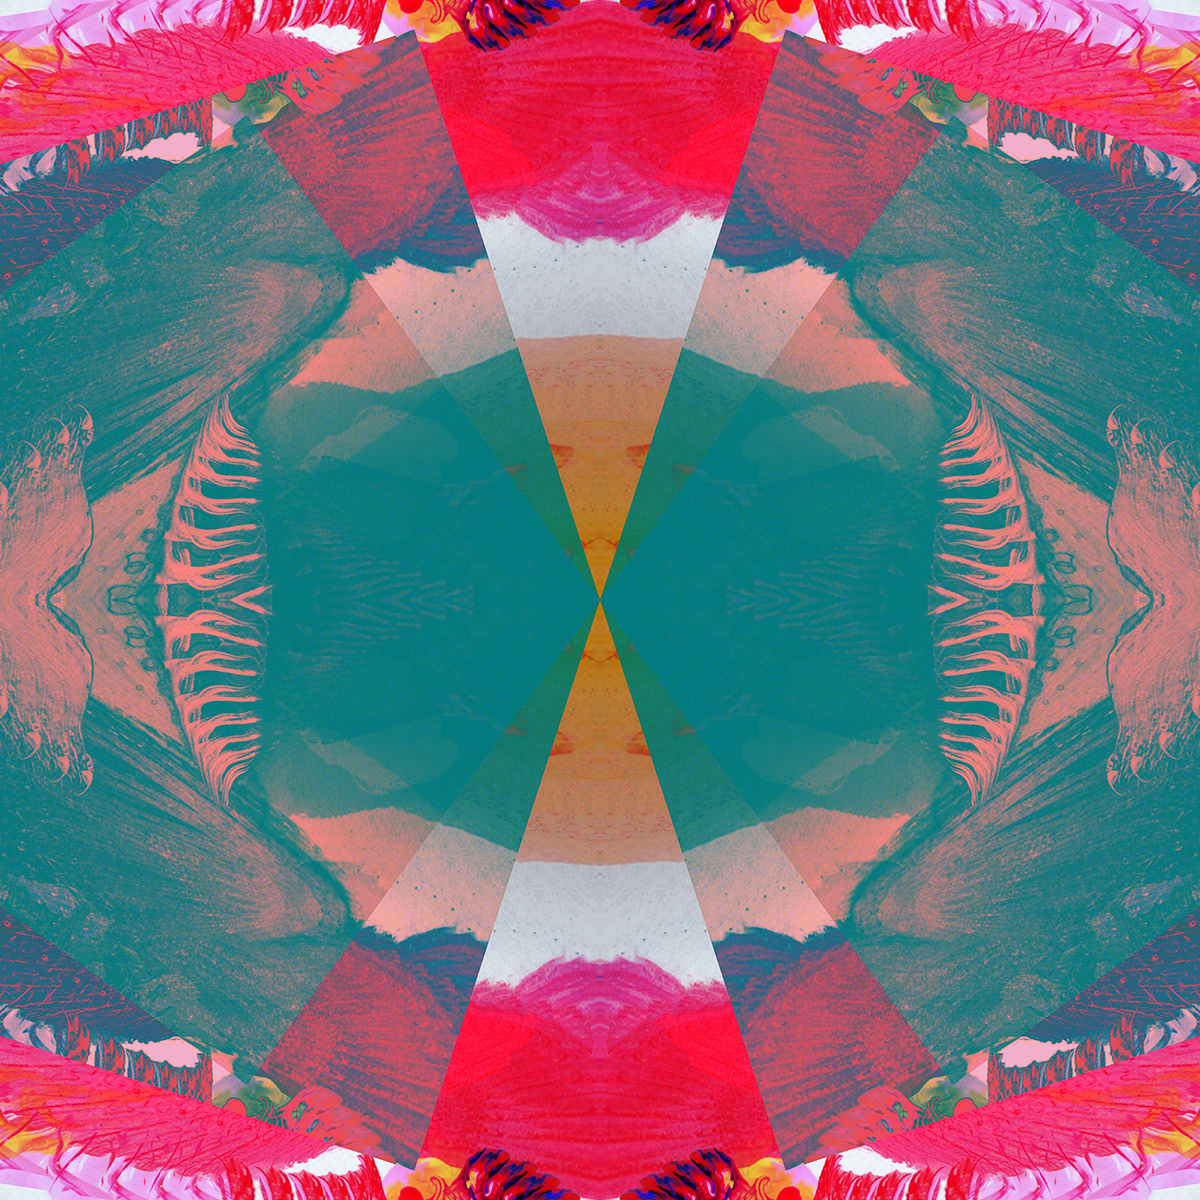 album art abstract mirror trippy colors digital manipulation